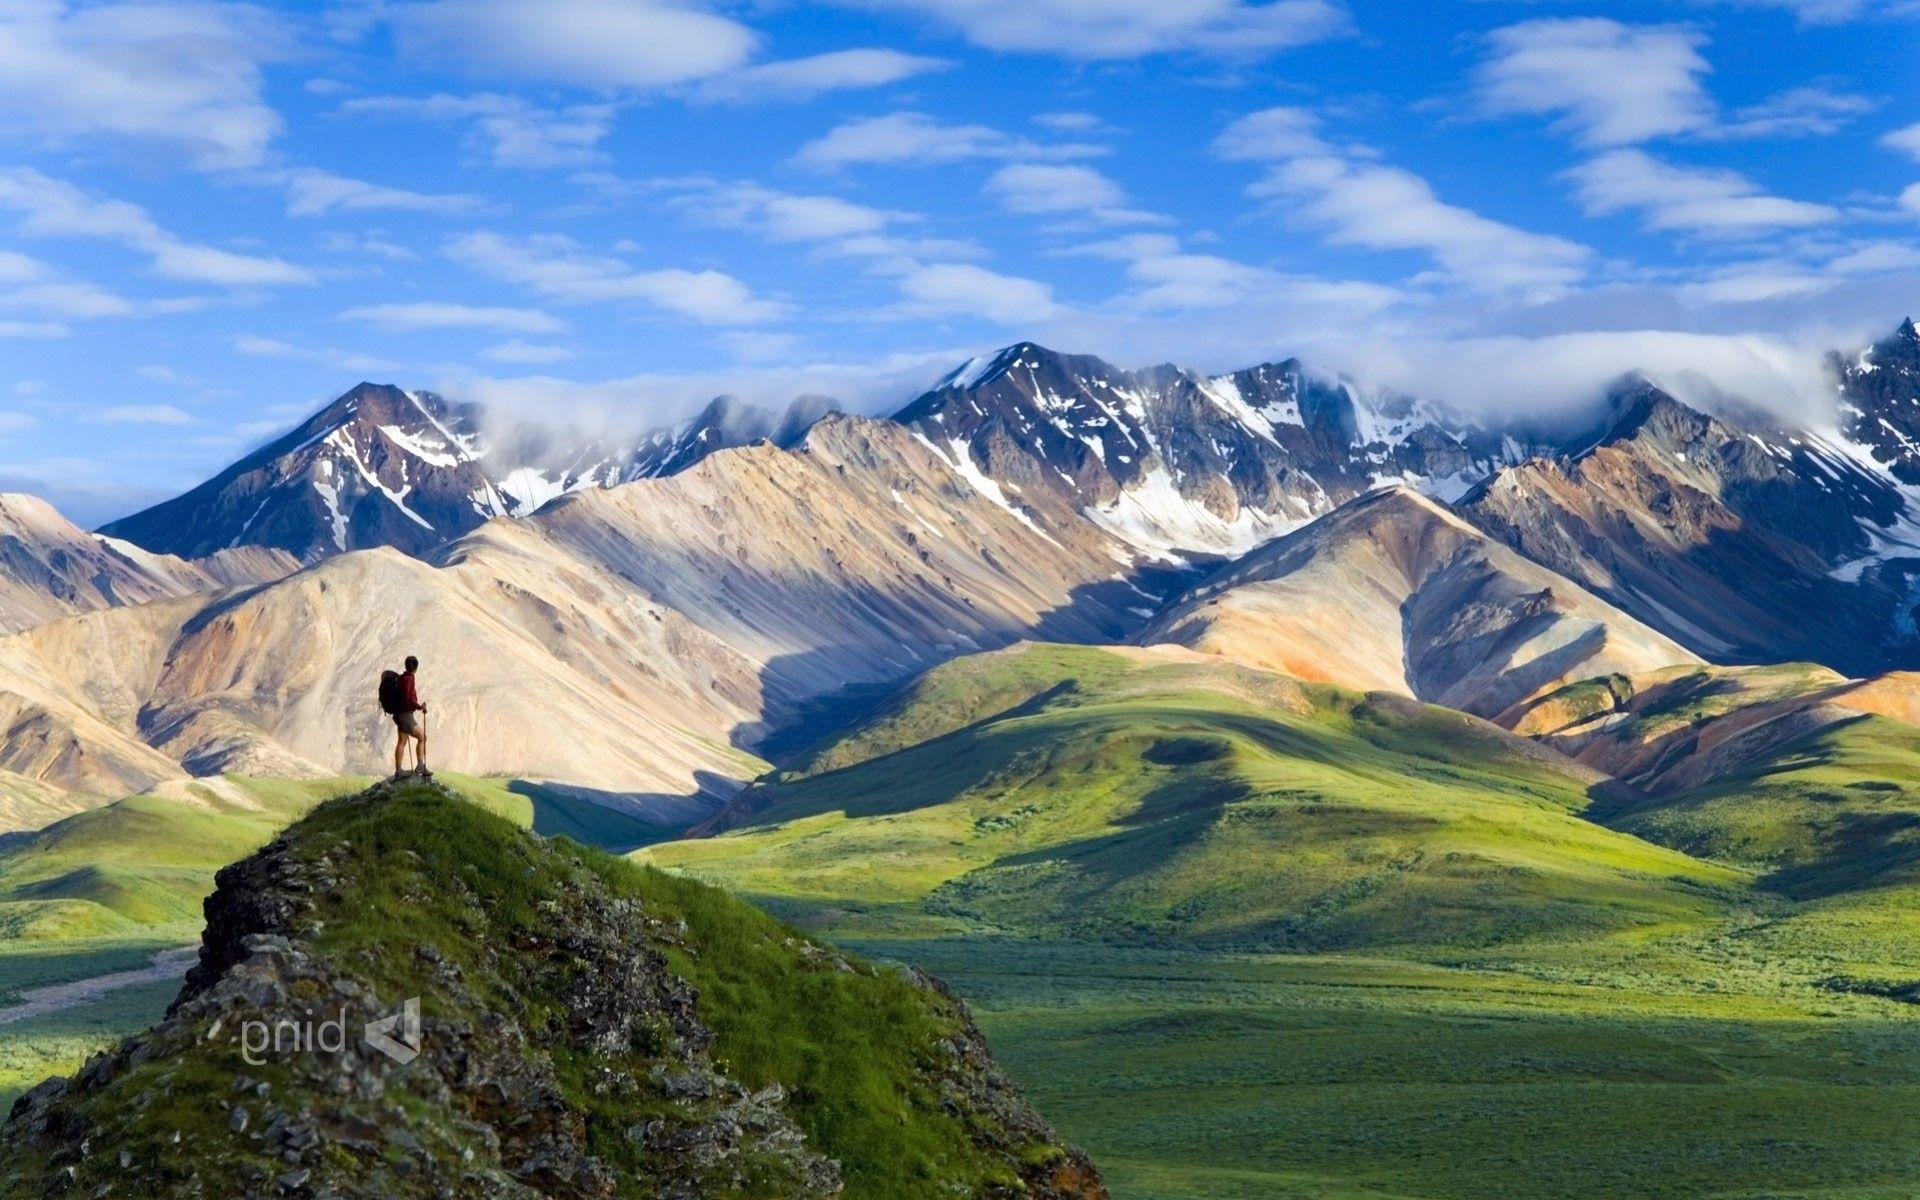 Denali National Park, HD Nature, 4k Wallpaper, Image, Background